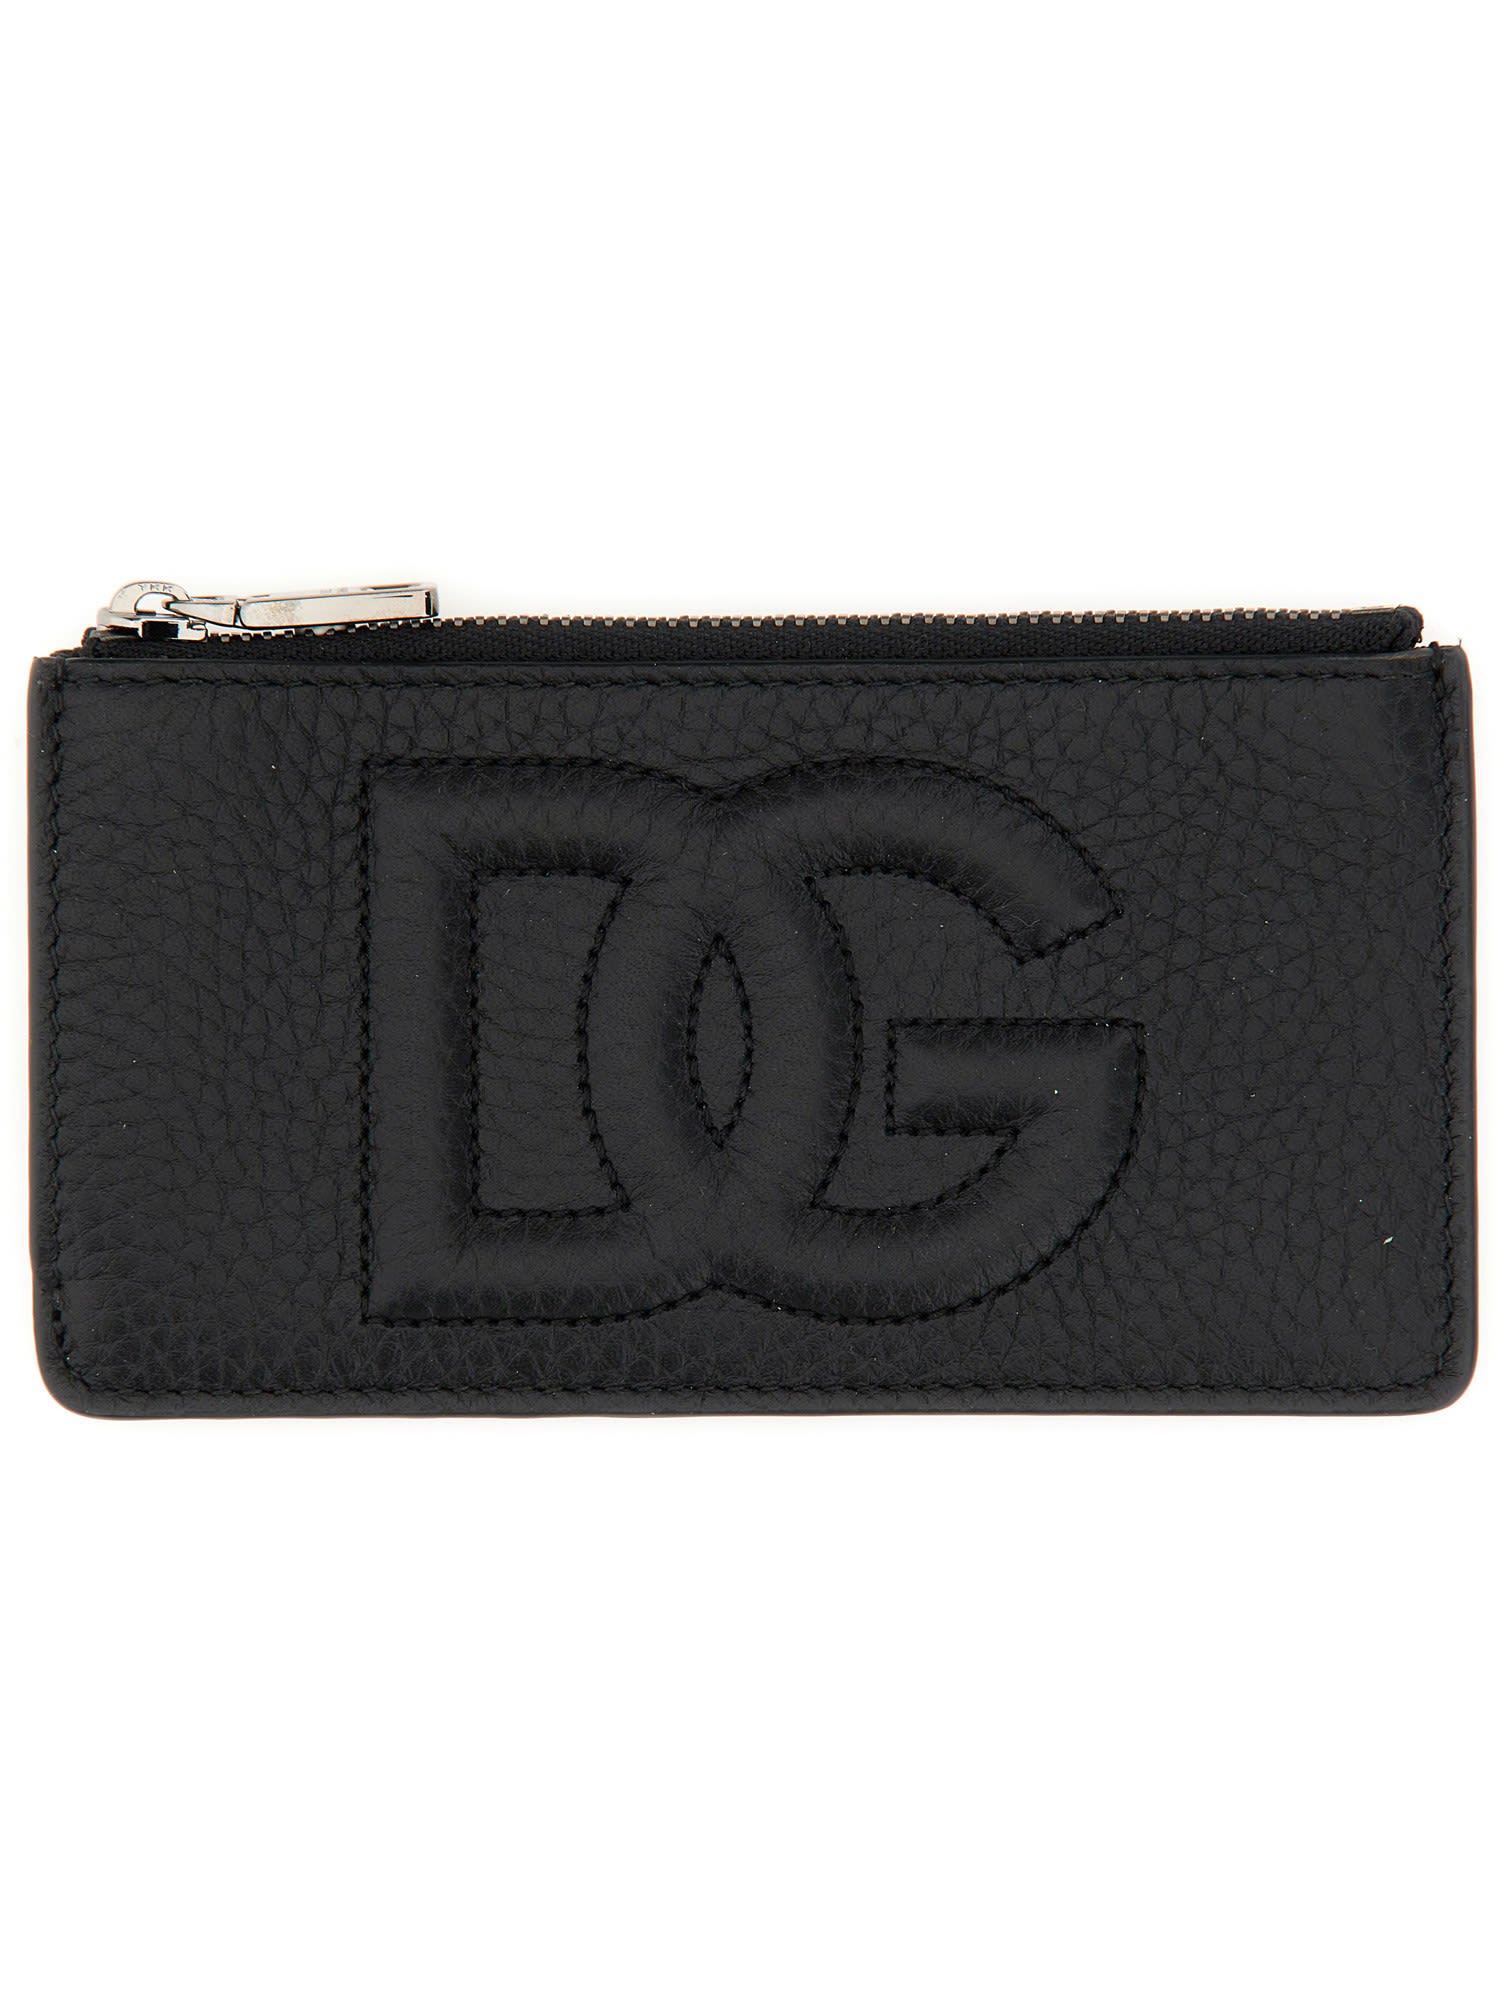 Dolce & Gabbana Leather Card Holder In Nero